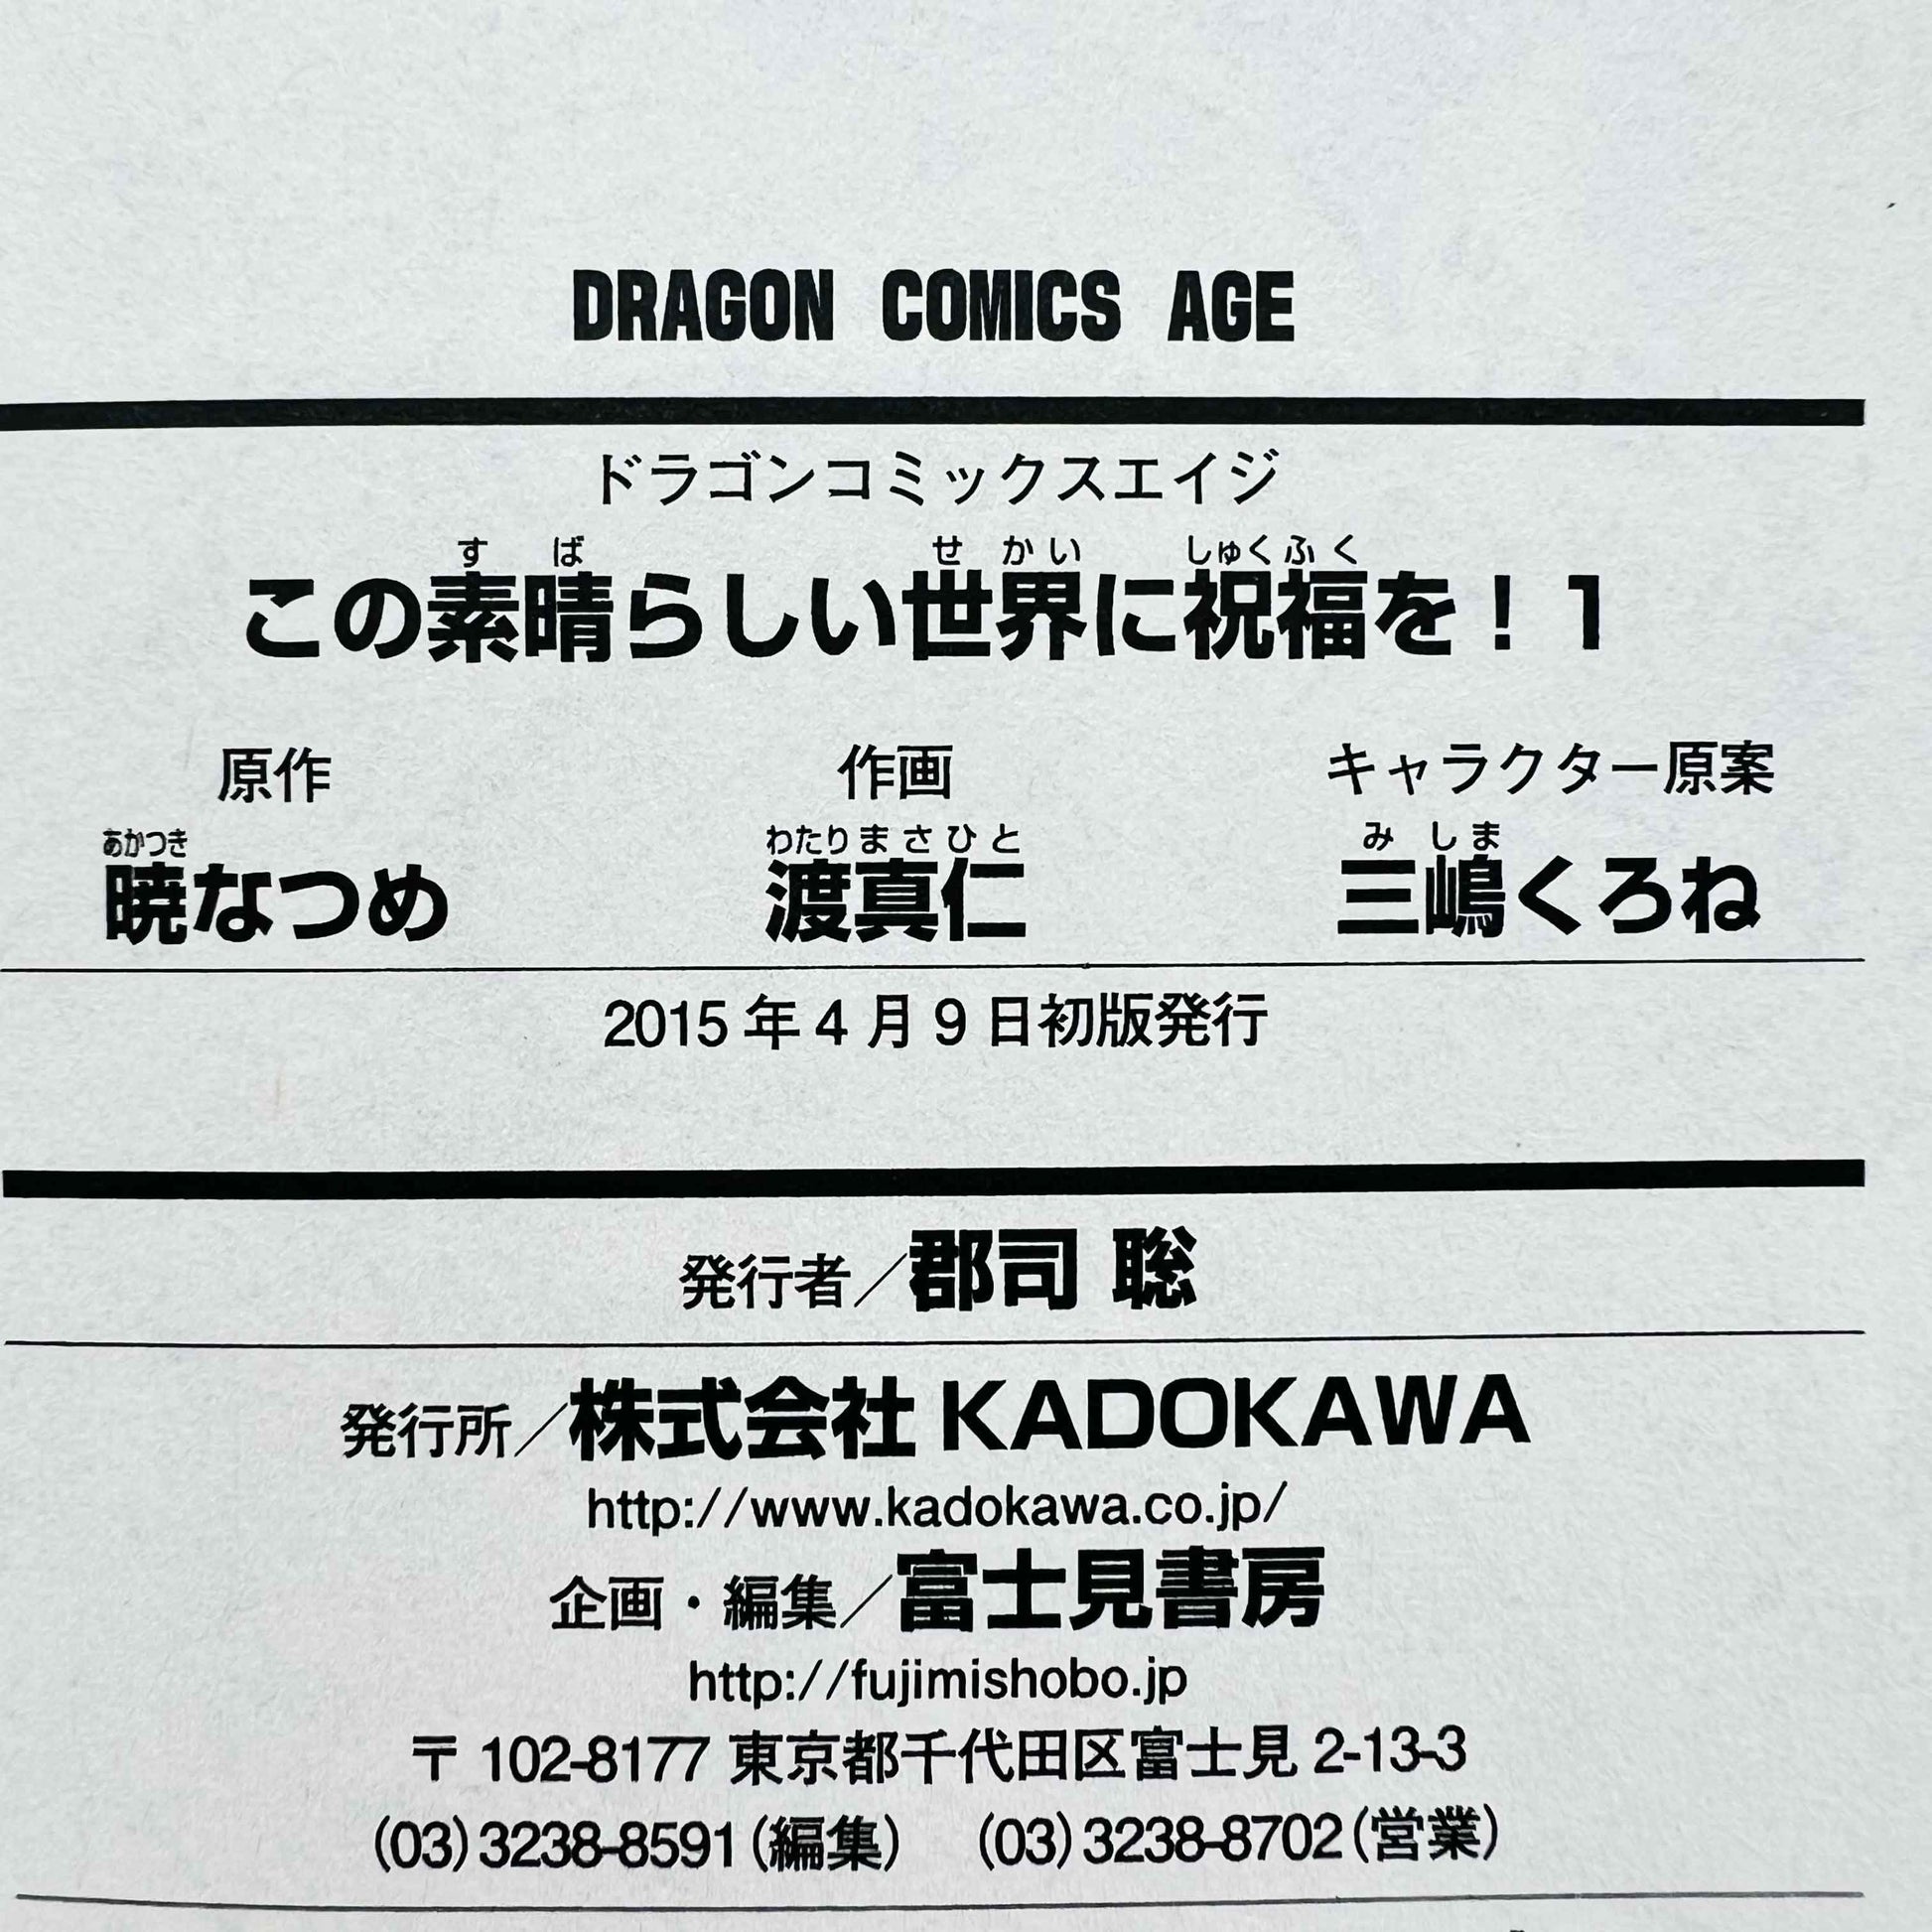 KonoSuba - Volume 01 - 1stPrint.net - 1st First Print Edition Manga Store - M-KONOSUBA-01-001